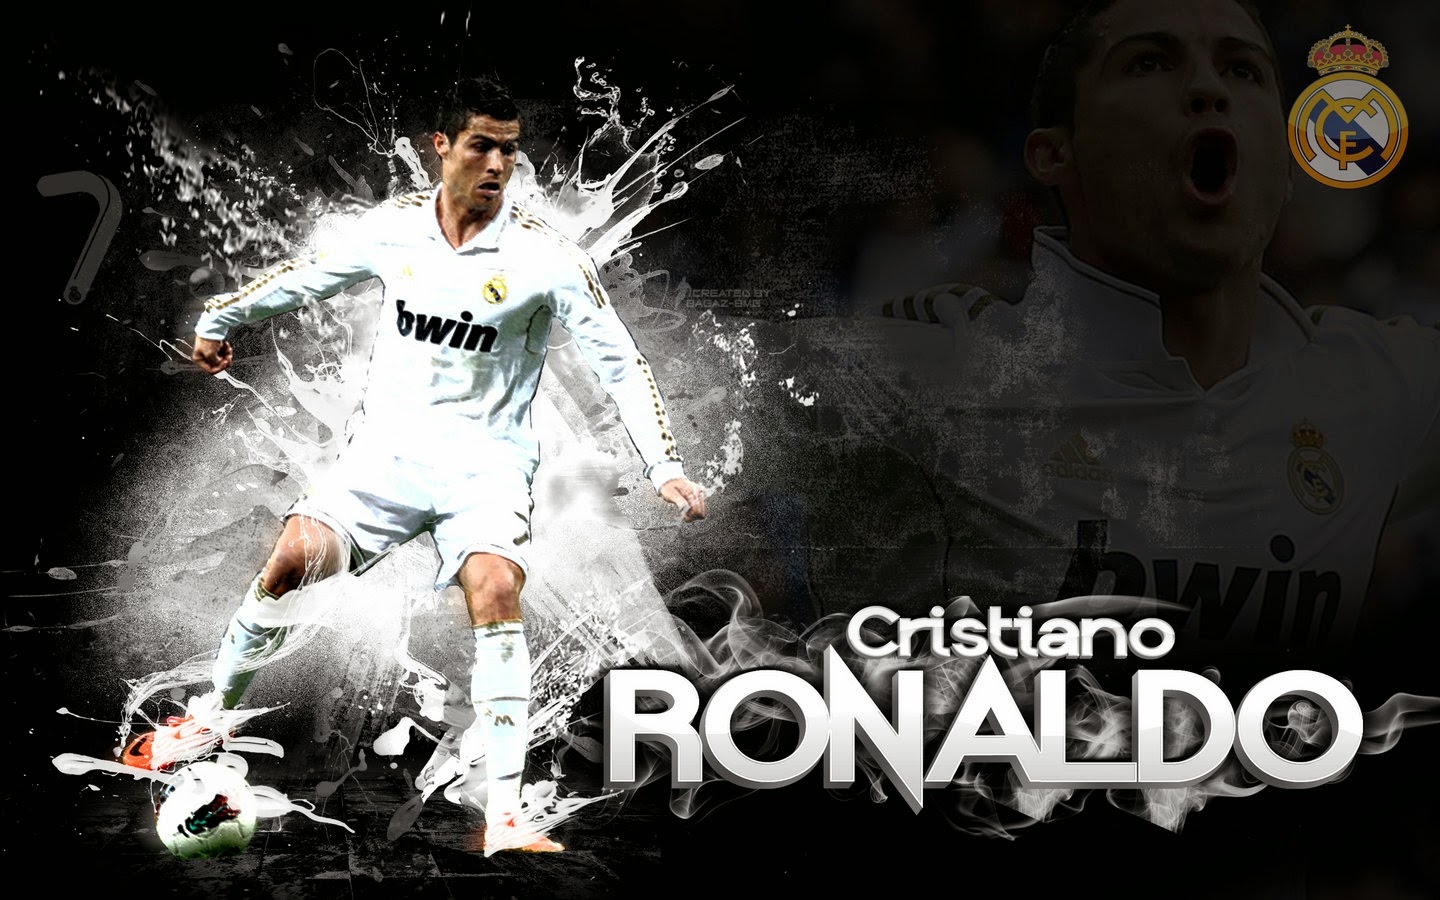 Pemain Bintang Dari Real Madrid Ini Cristiano Ronaldo Buka